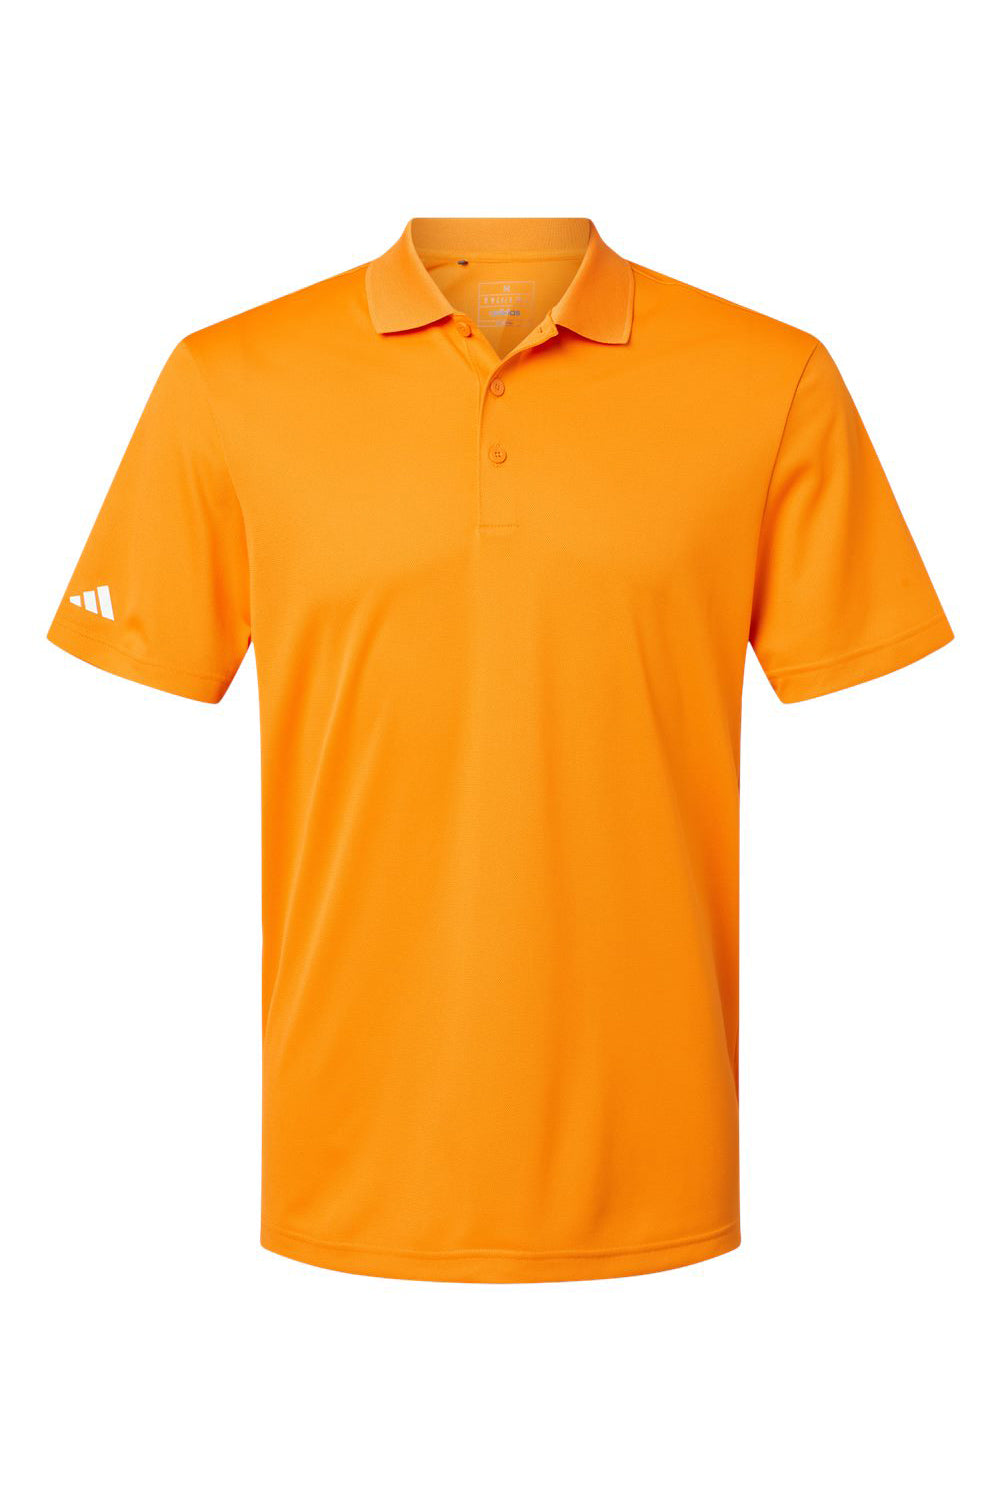 Adidas A430 Mens Basic Short Sleeve Polo Shirt Bright Orange Flat Front